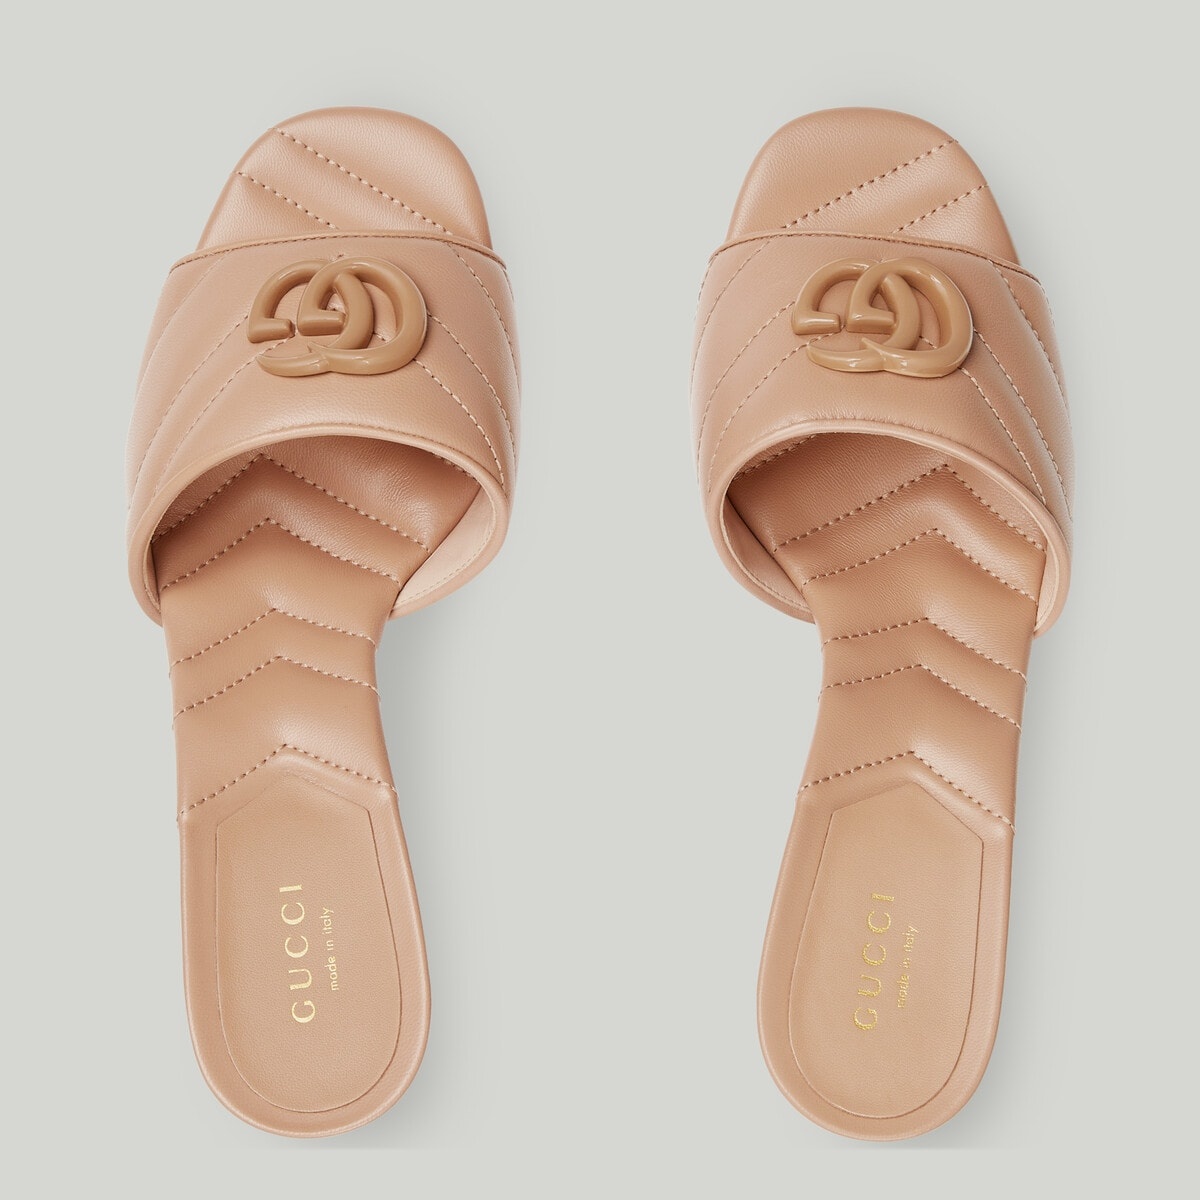 Gucci Women's Double G Block Heel Thong Sandals